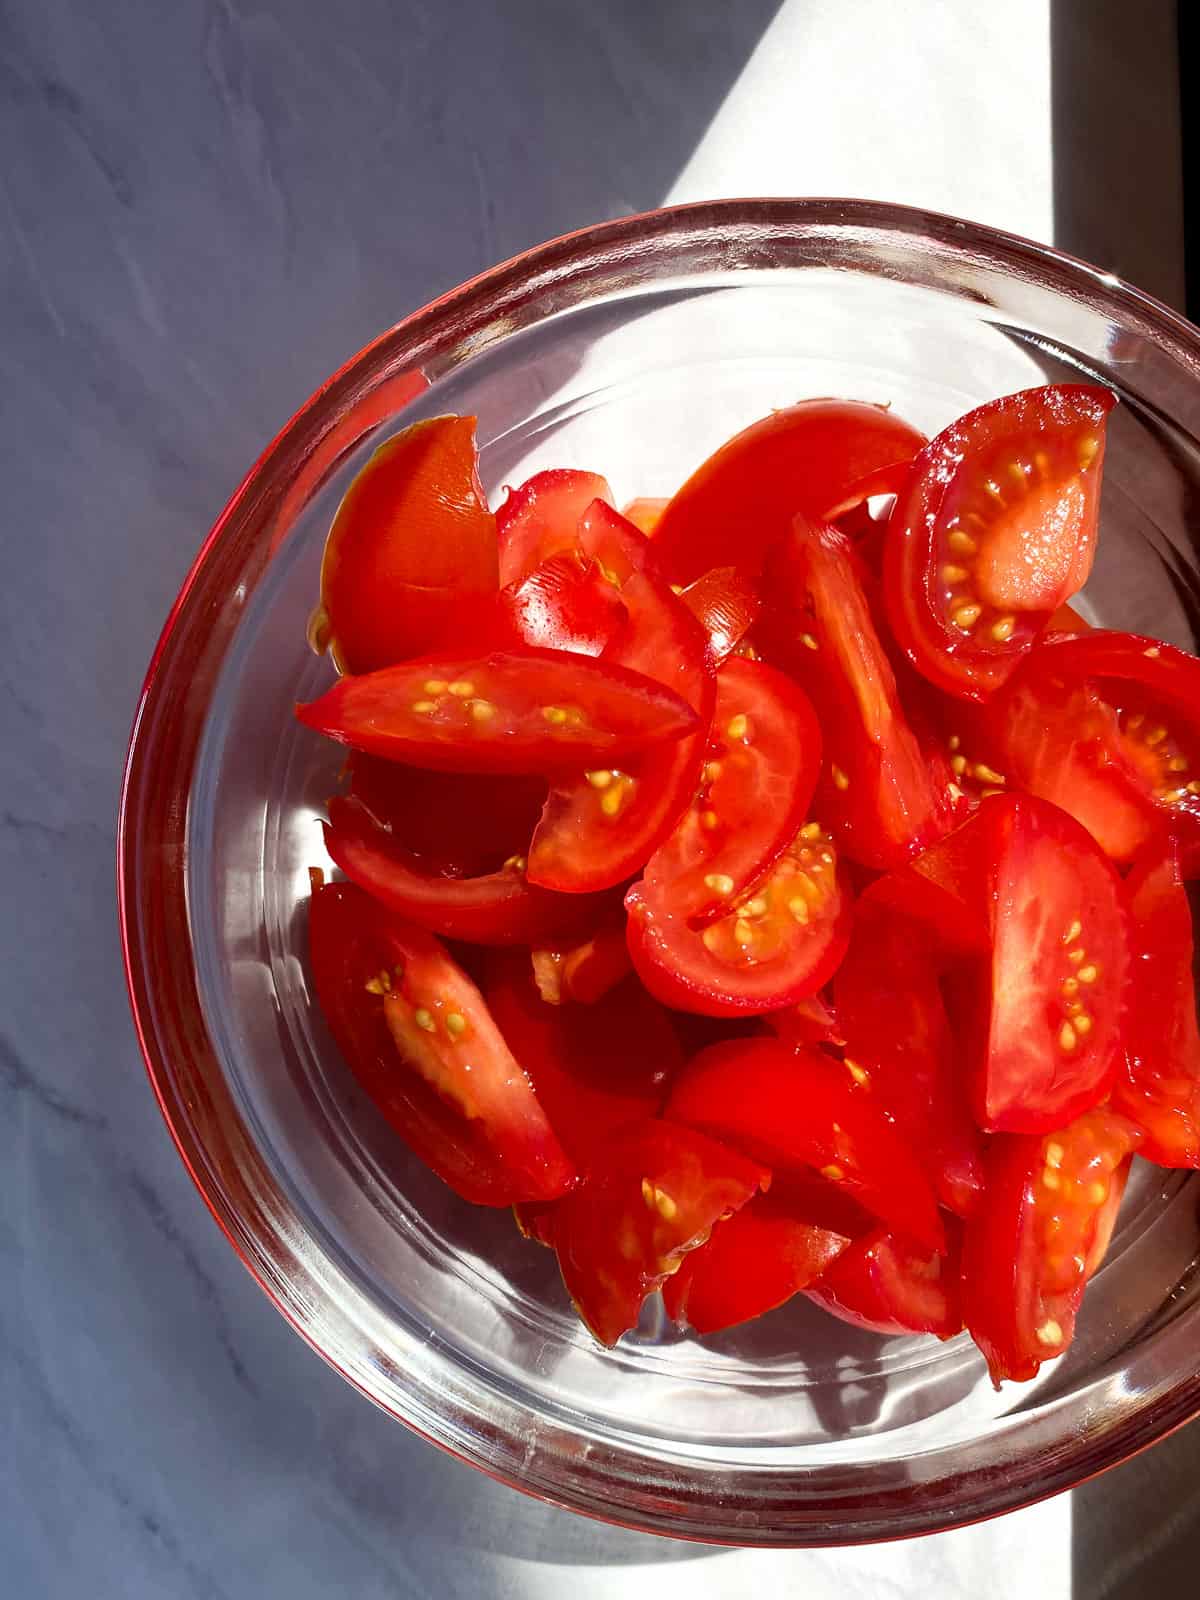 juicy tomatoes in sunlight